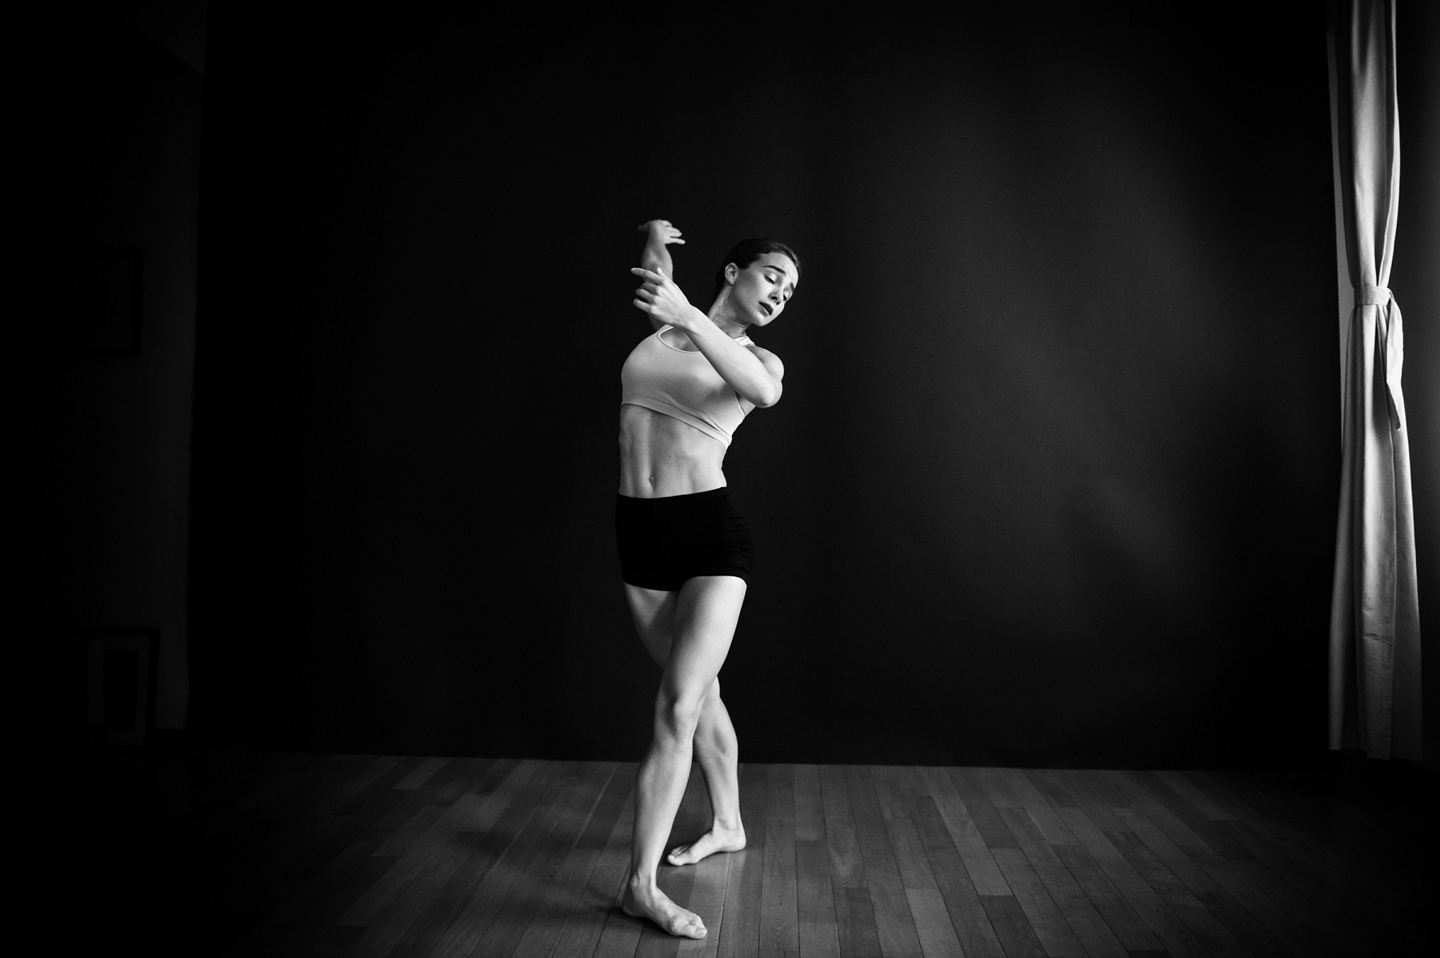 Los Angeles Dance Portrait Photo - Olga Sokolova - by Tommy Xing Photography 13.JPG